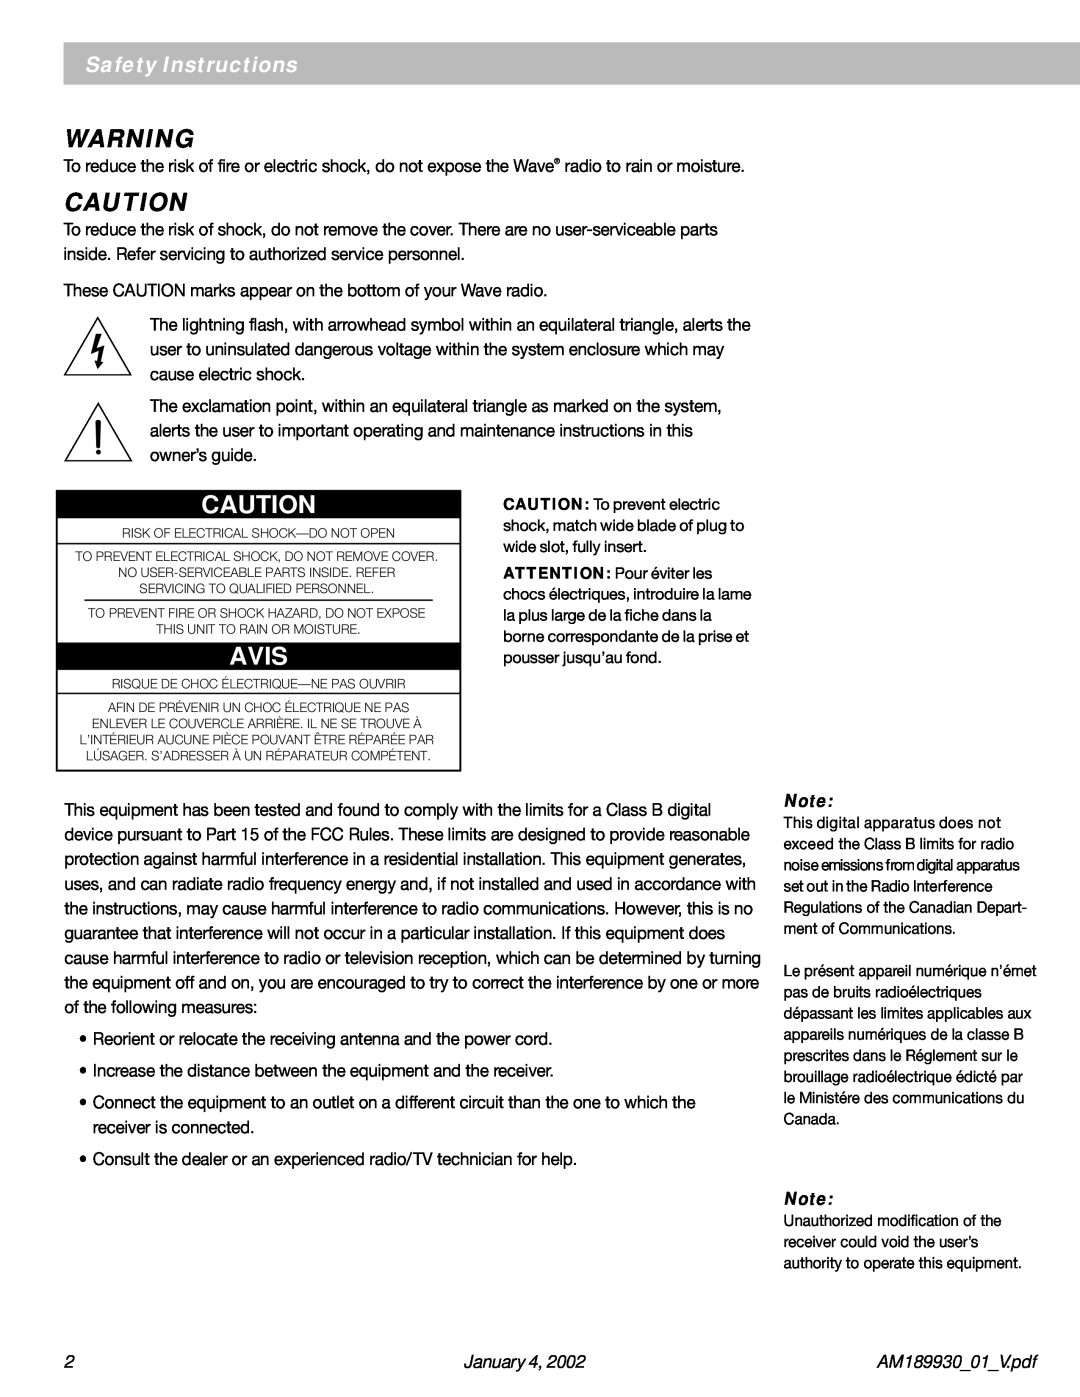 Bose AM189930 manual Safety Instructions, January, Avis 